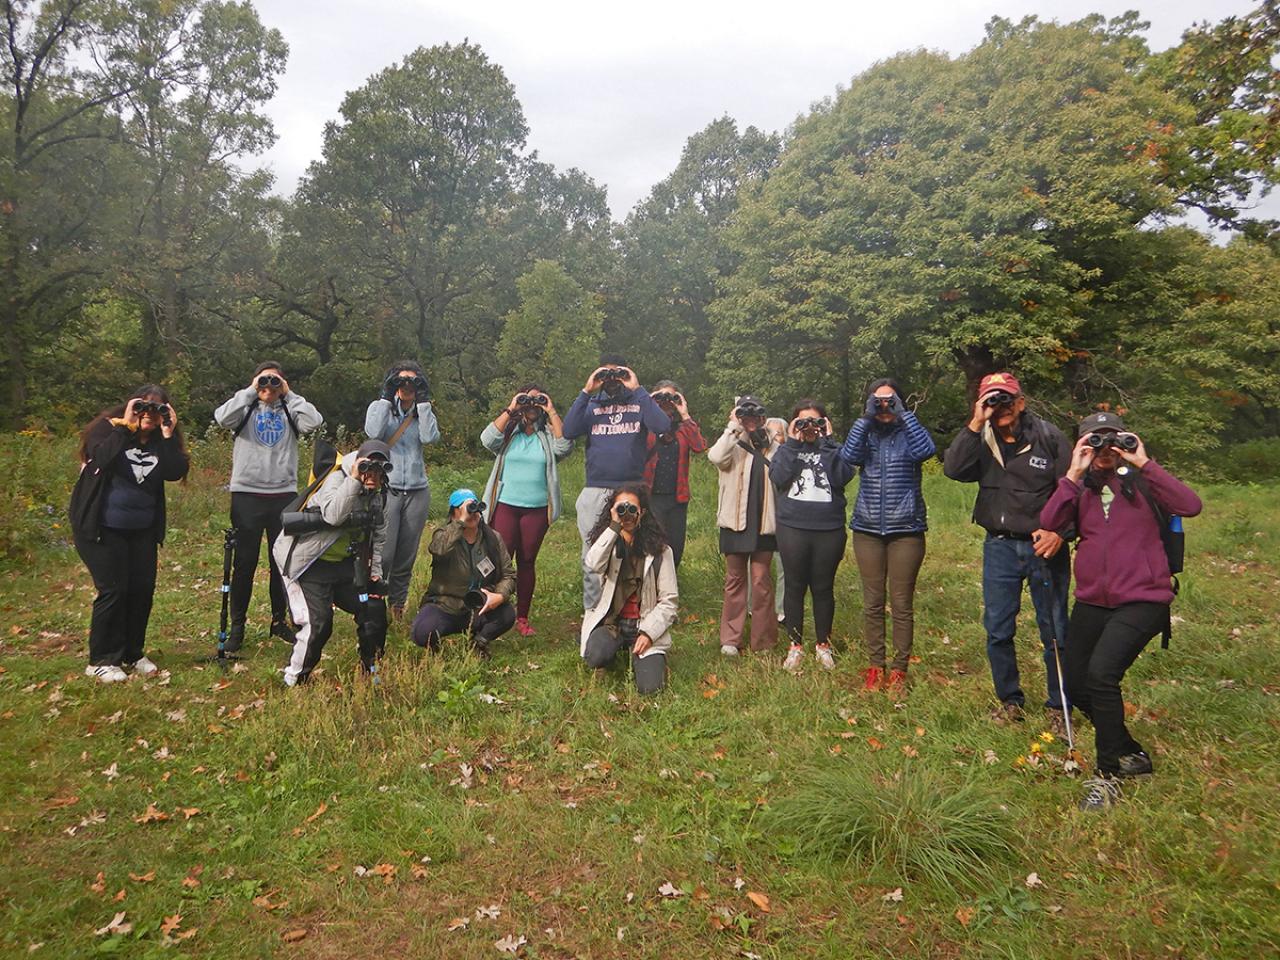 A BIPOC birding group poses, looking through binoculars